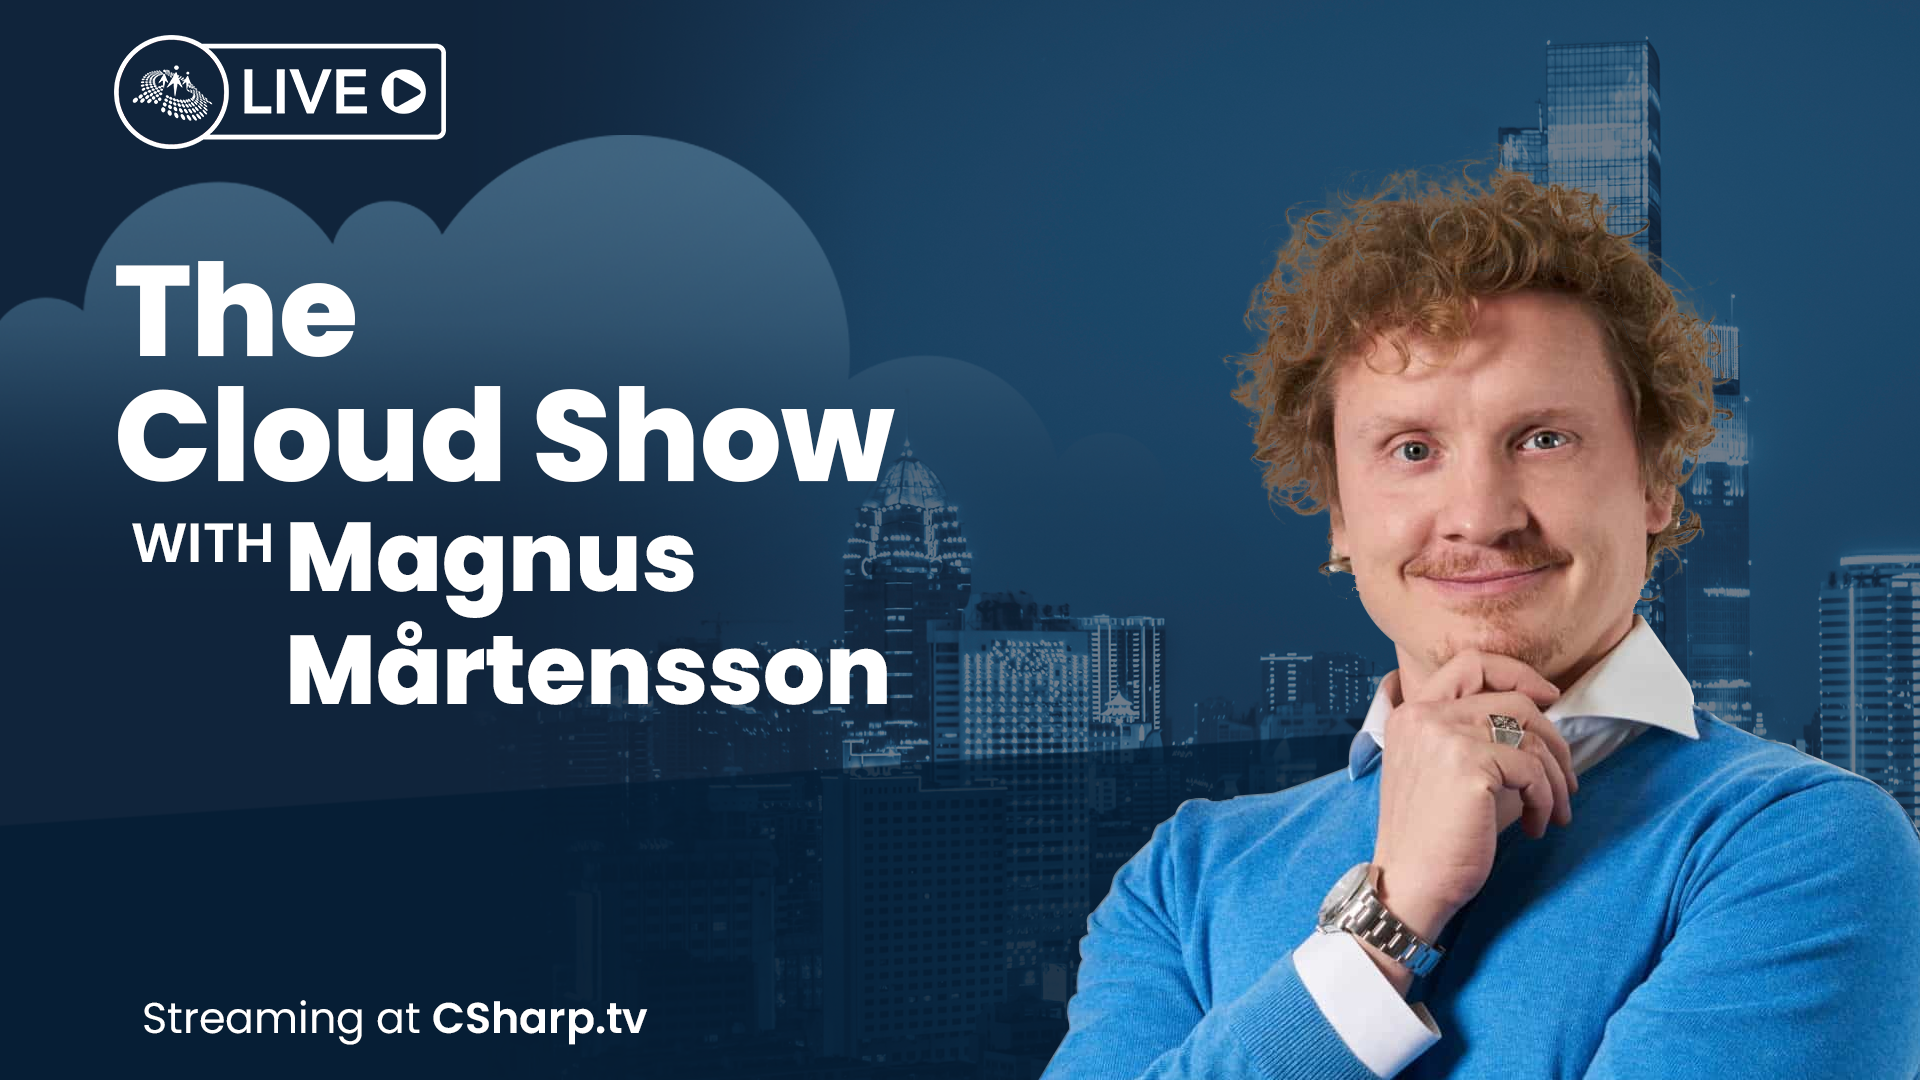 The Cloud Show with Magnus Mårtensson